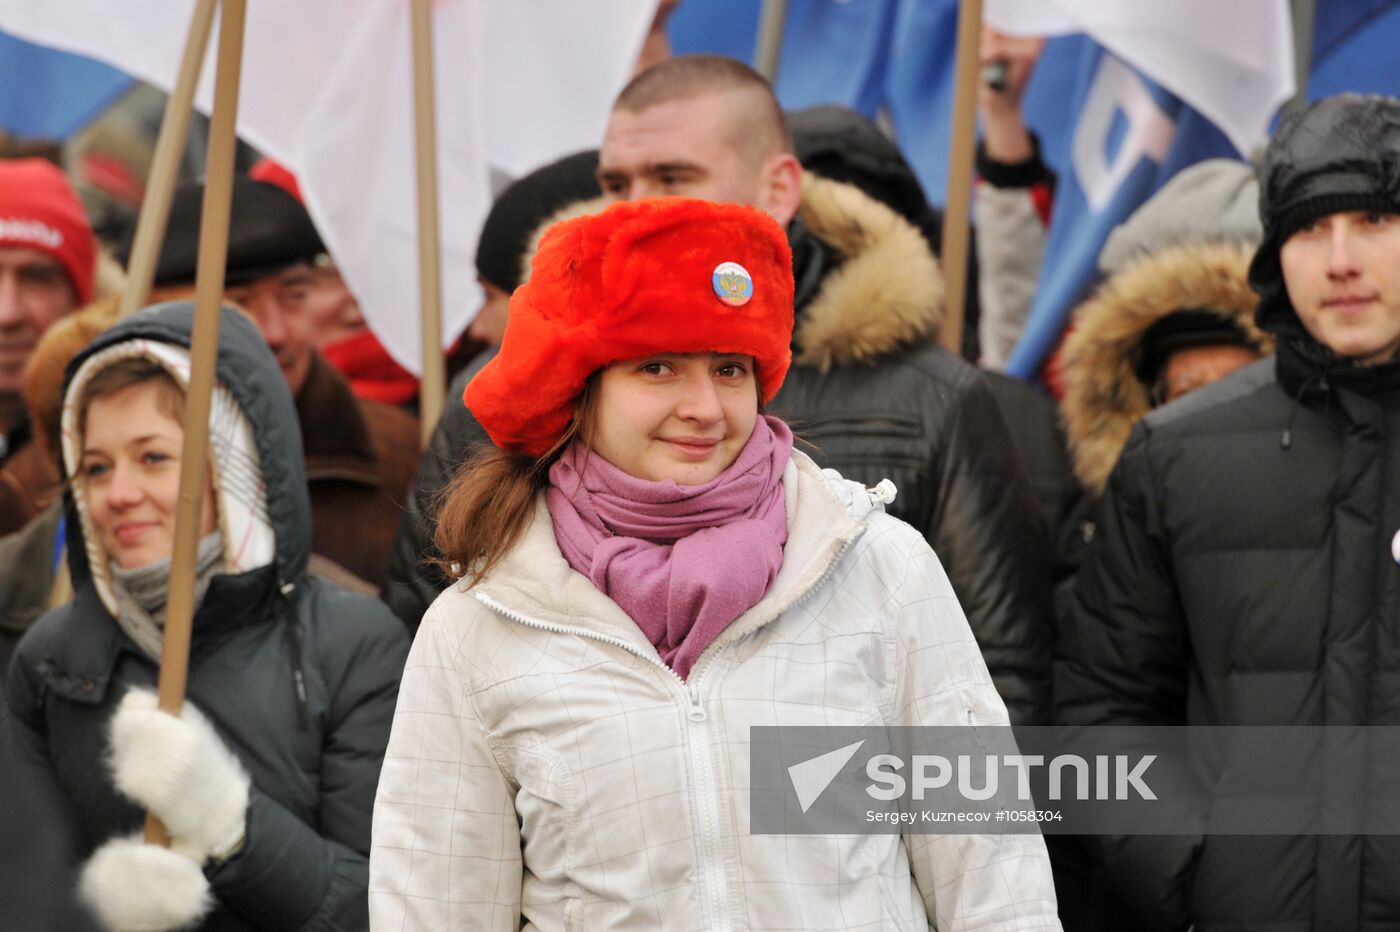 Vladimir Putin supporters' rally on Manege Square